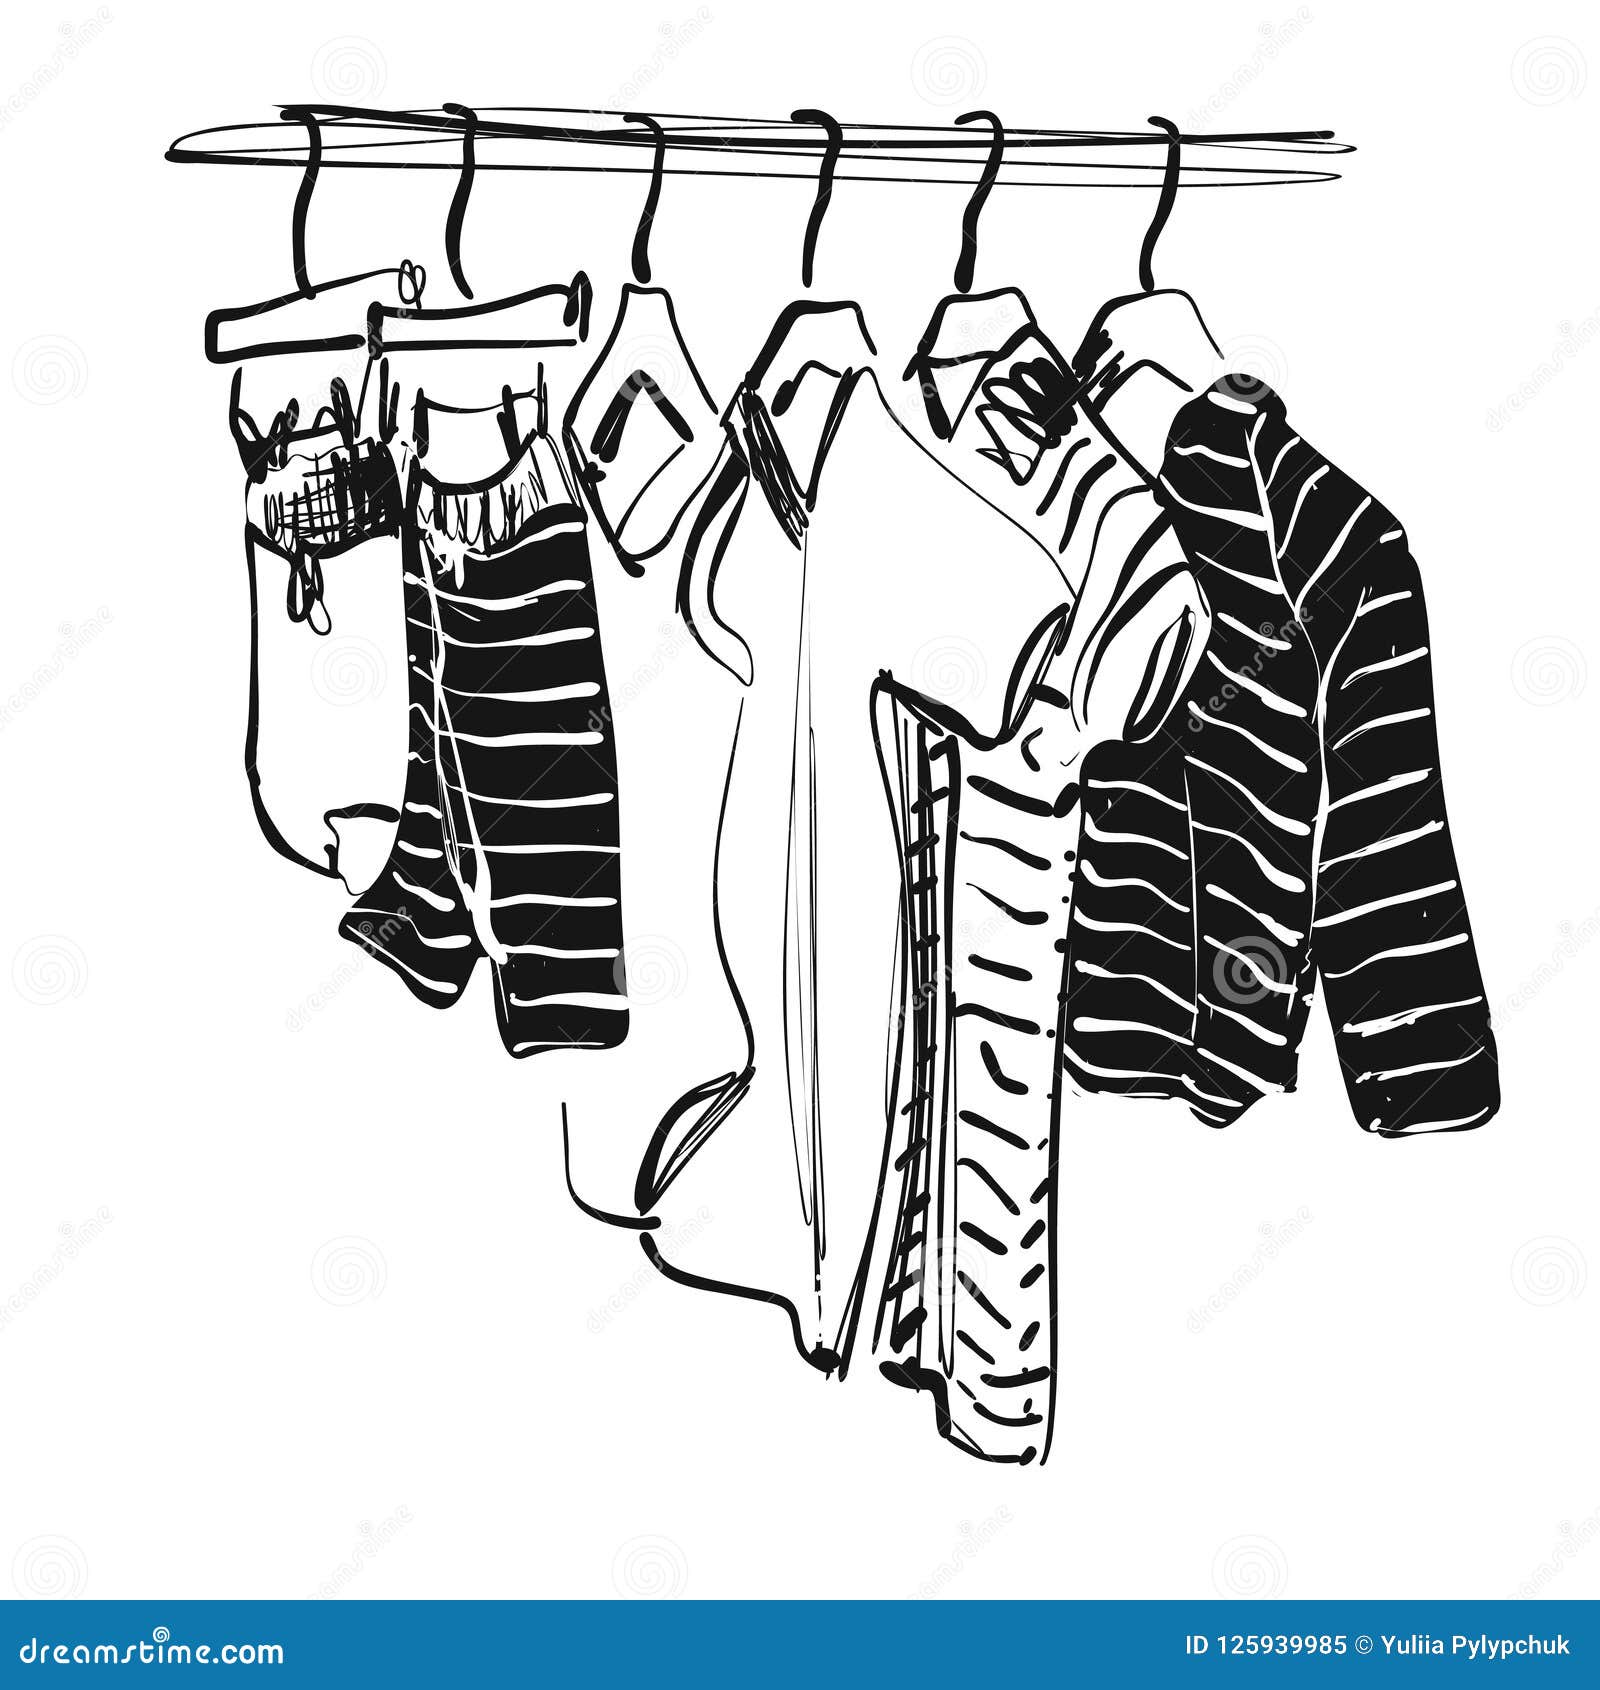 https://thumbs.dreamstime.com/z/hand-drawn-wardrobe-sketch-baby-clothes-hungers-strip-print-125939985.jpg